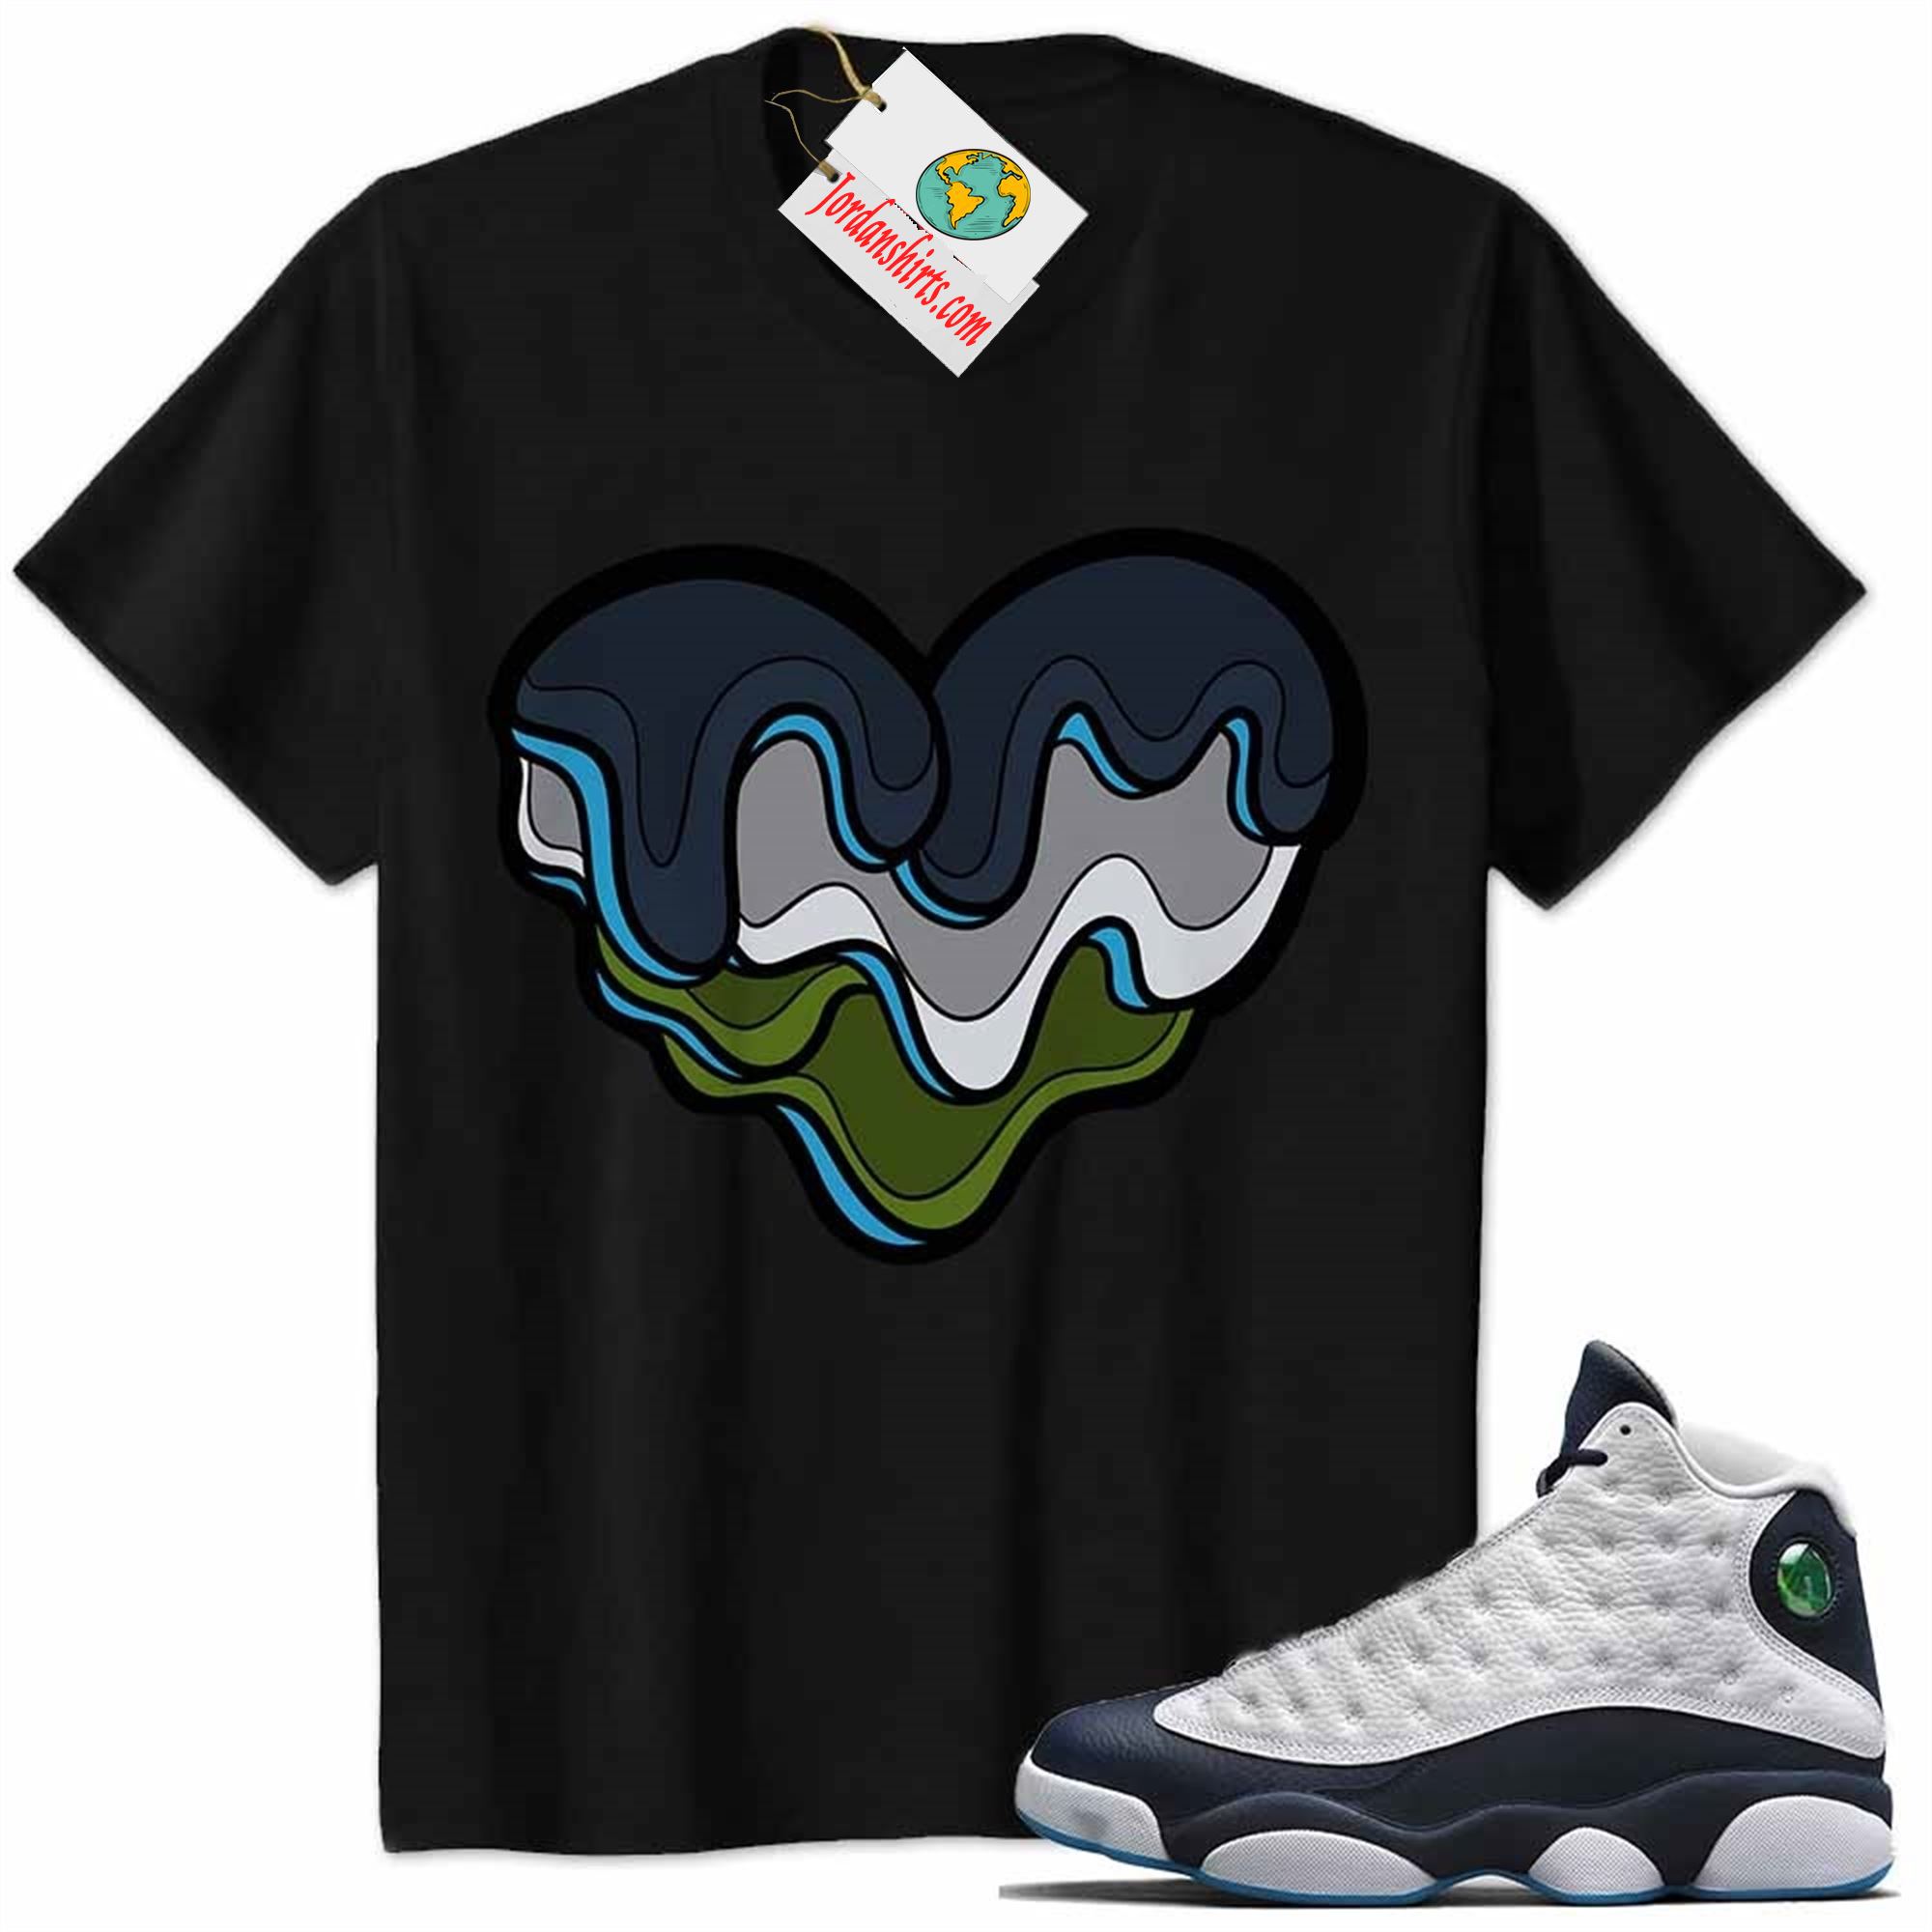 Jordan 13 Shirt, Melt Dripping Heart Black Air Jordan 13 Obsidian 13s Size Up To 5xl